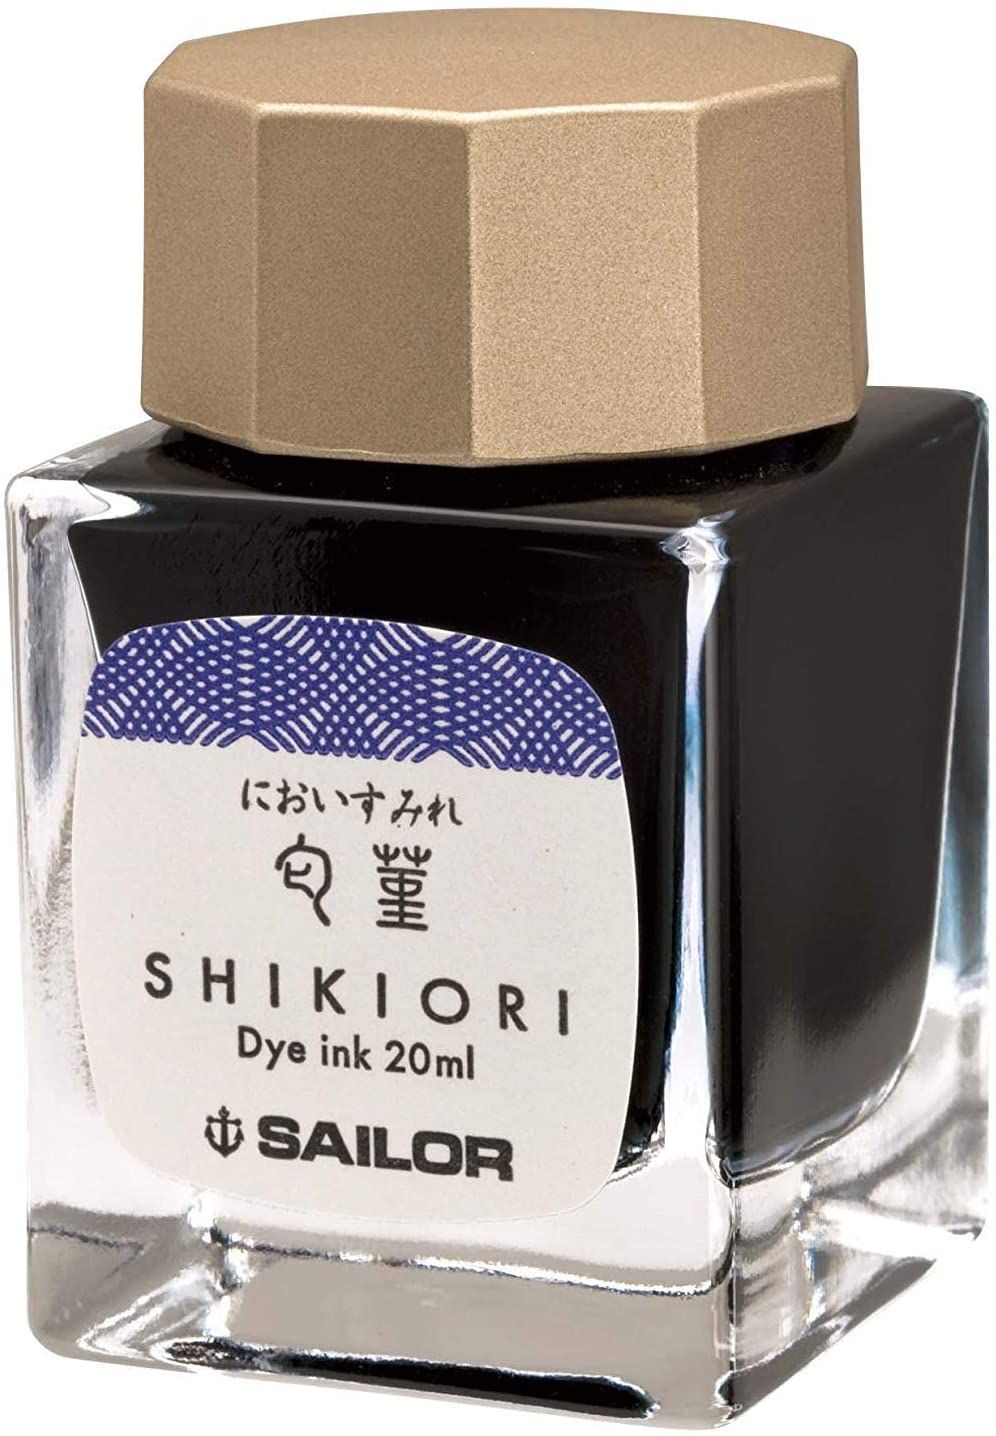  Mực Bút Máy Sailor Shikiori Ink - Four Seasons Lọ 20ml 